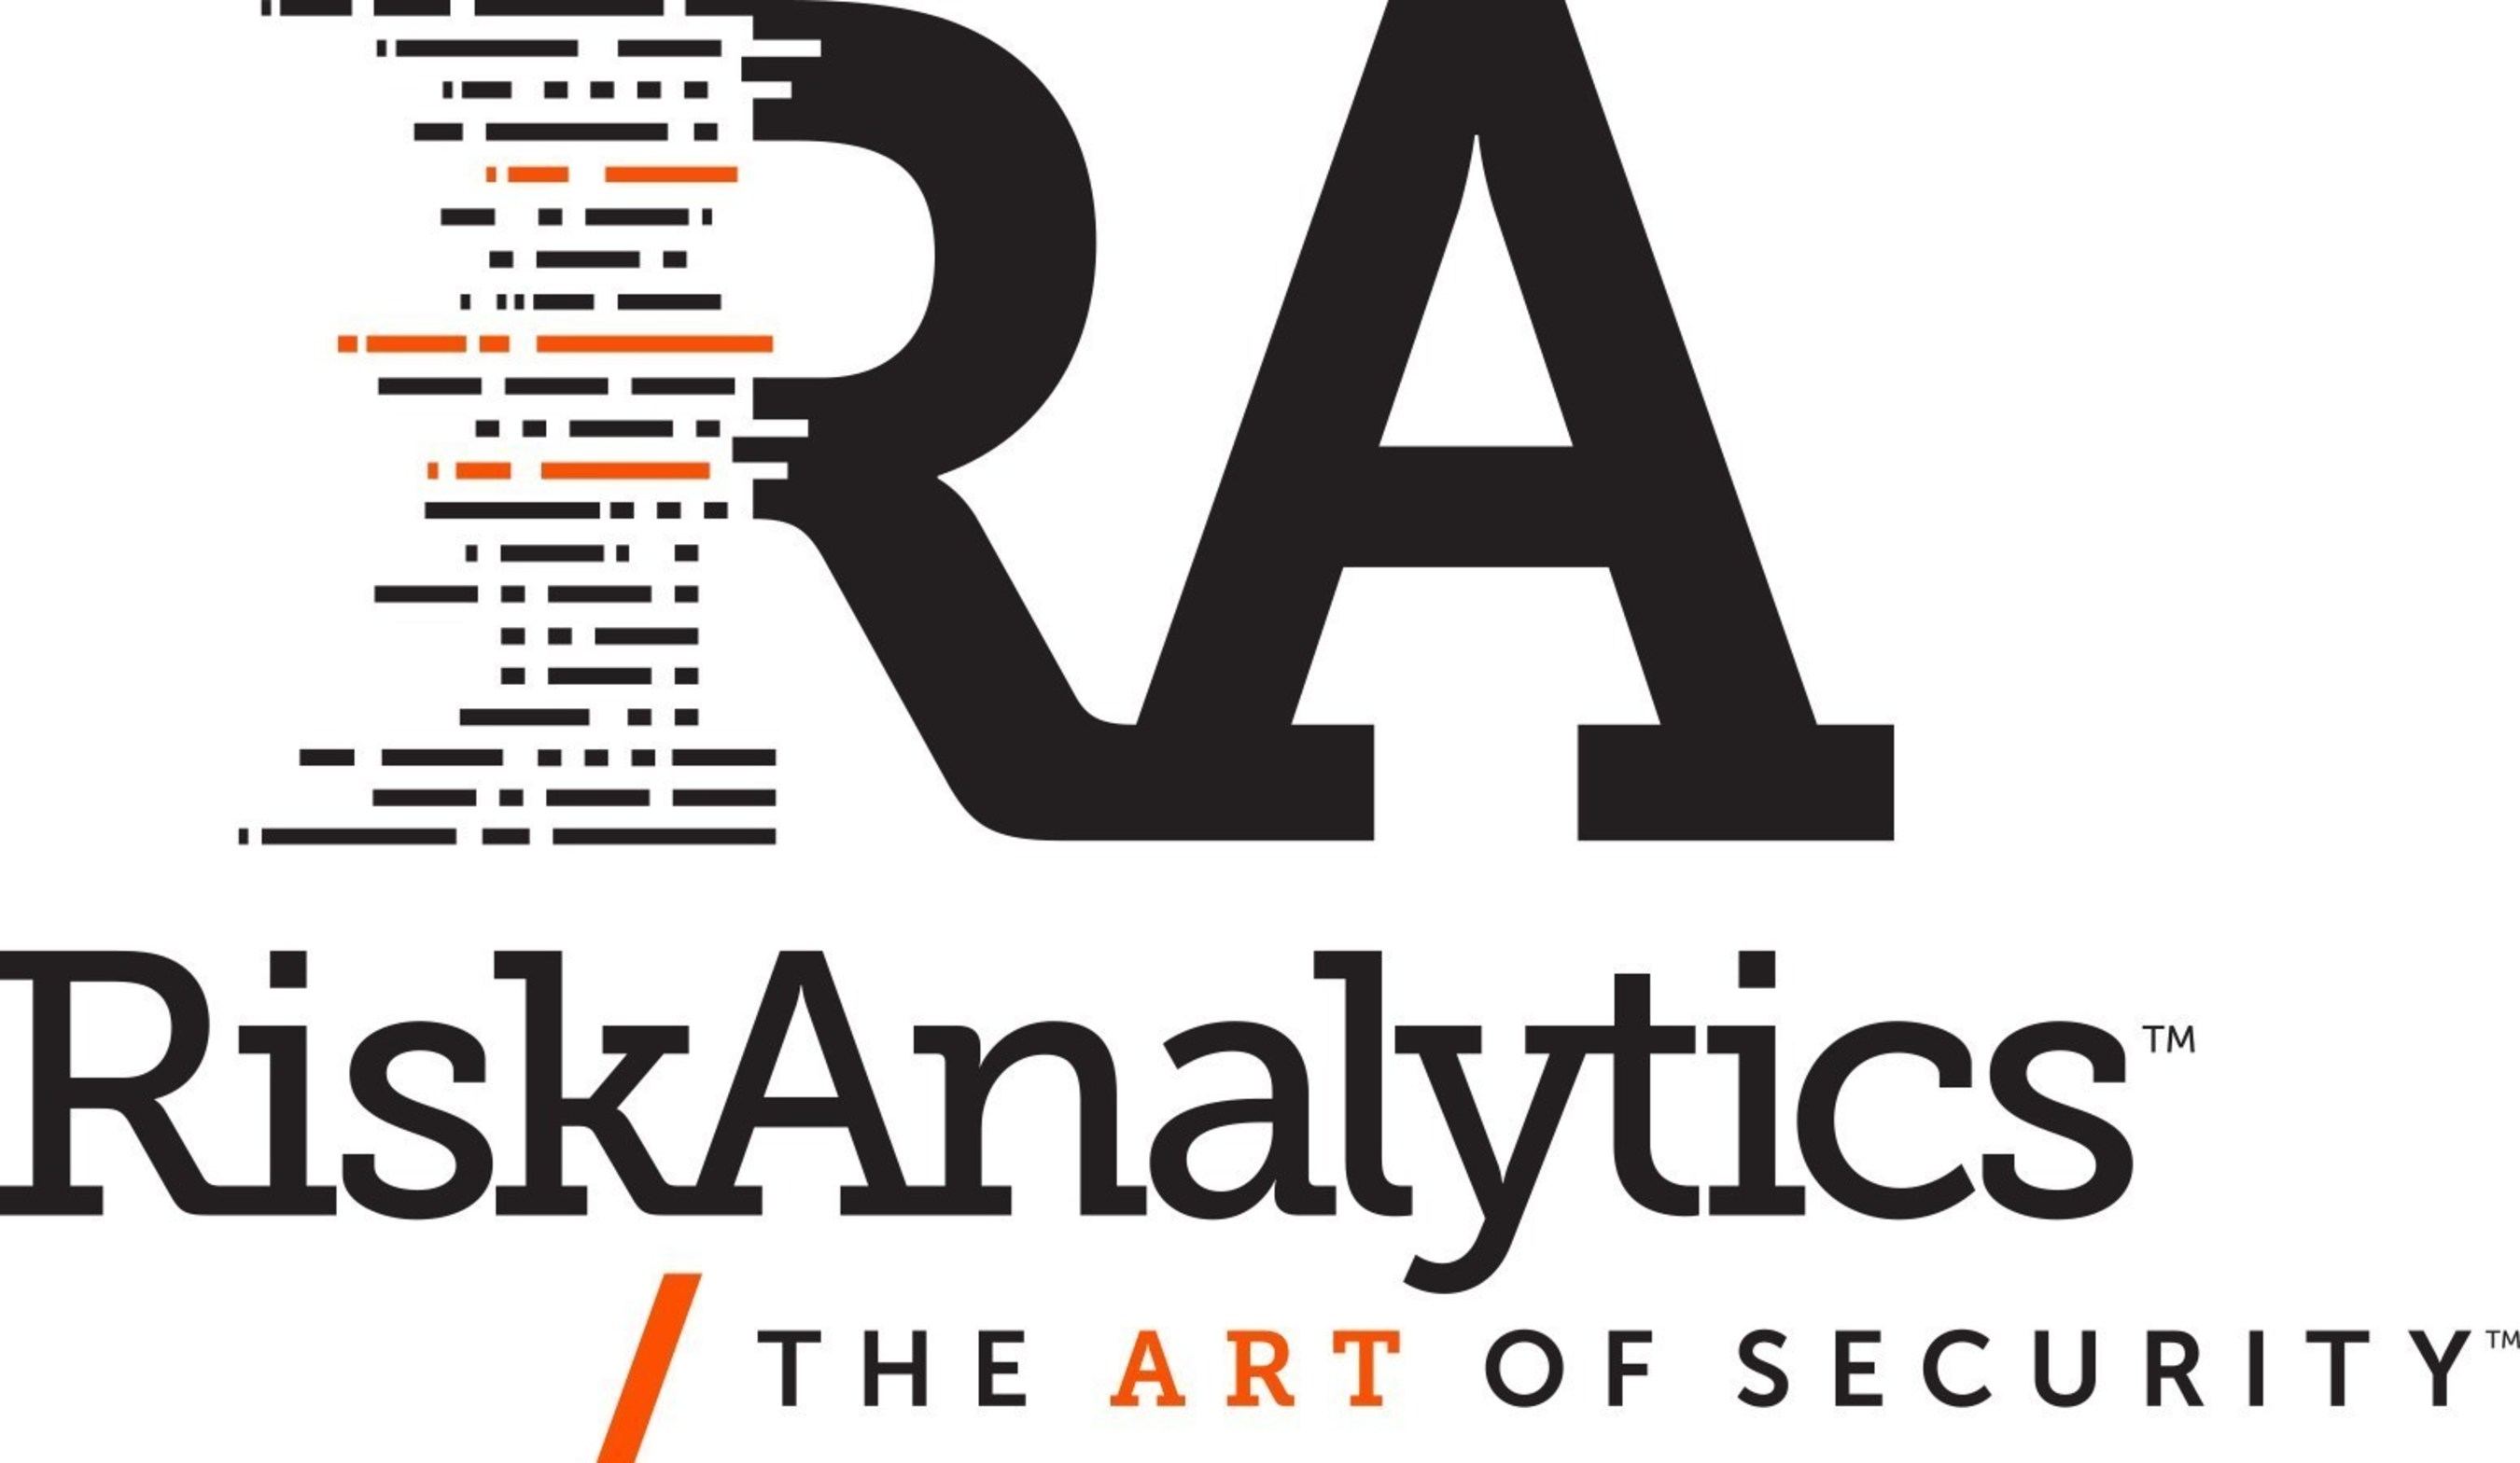 RiskAnalytics is located in Overland Park, Kansas.